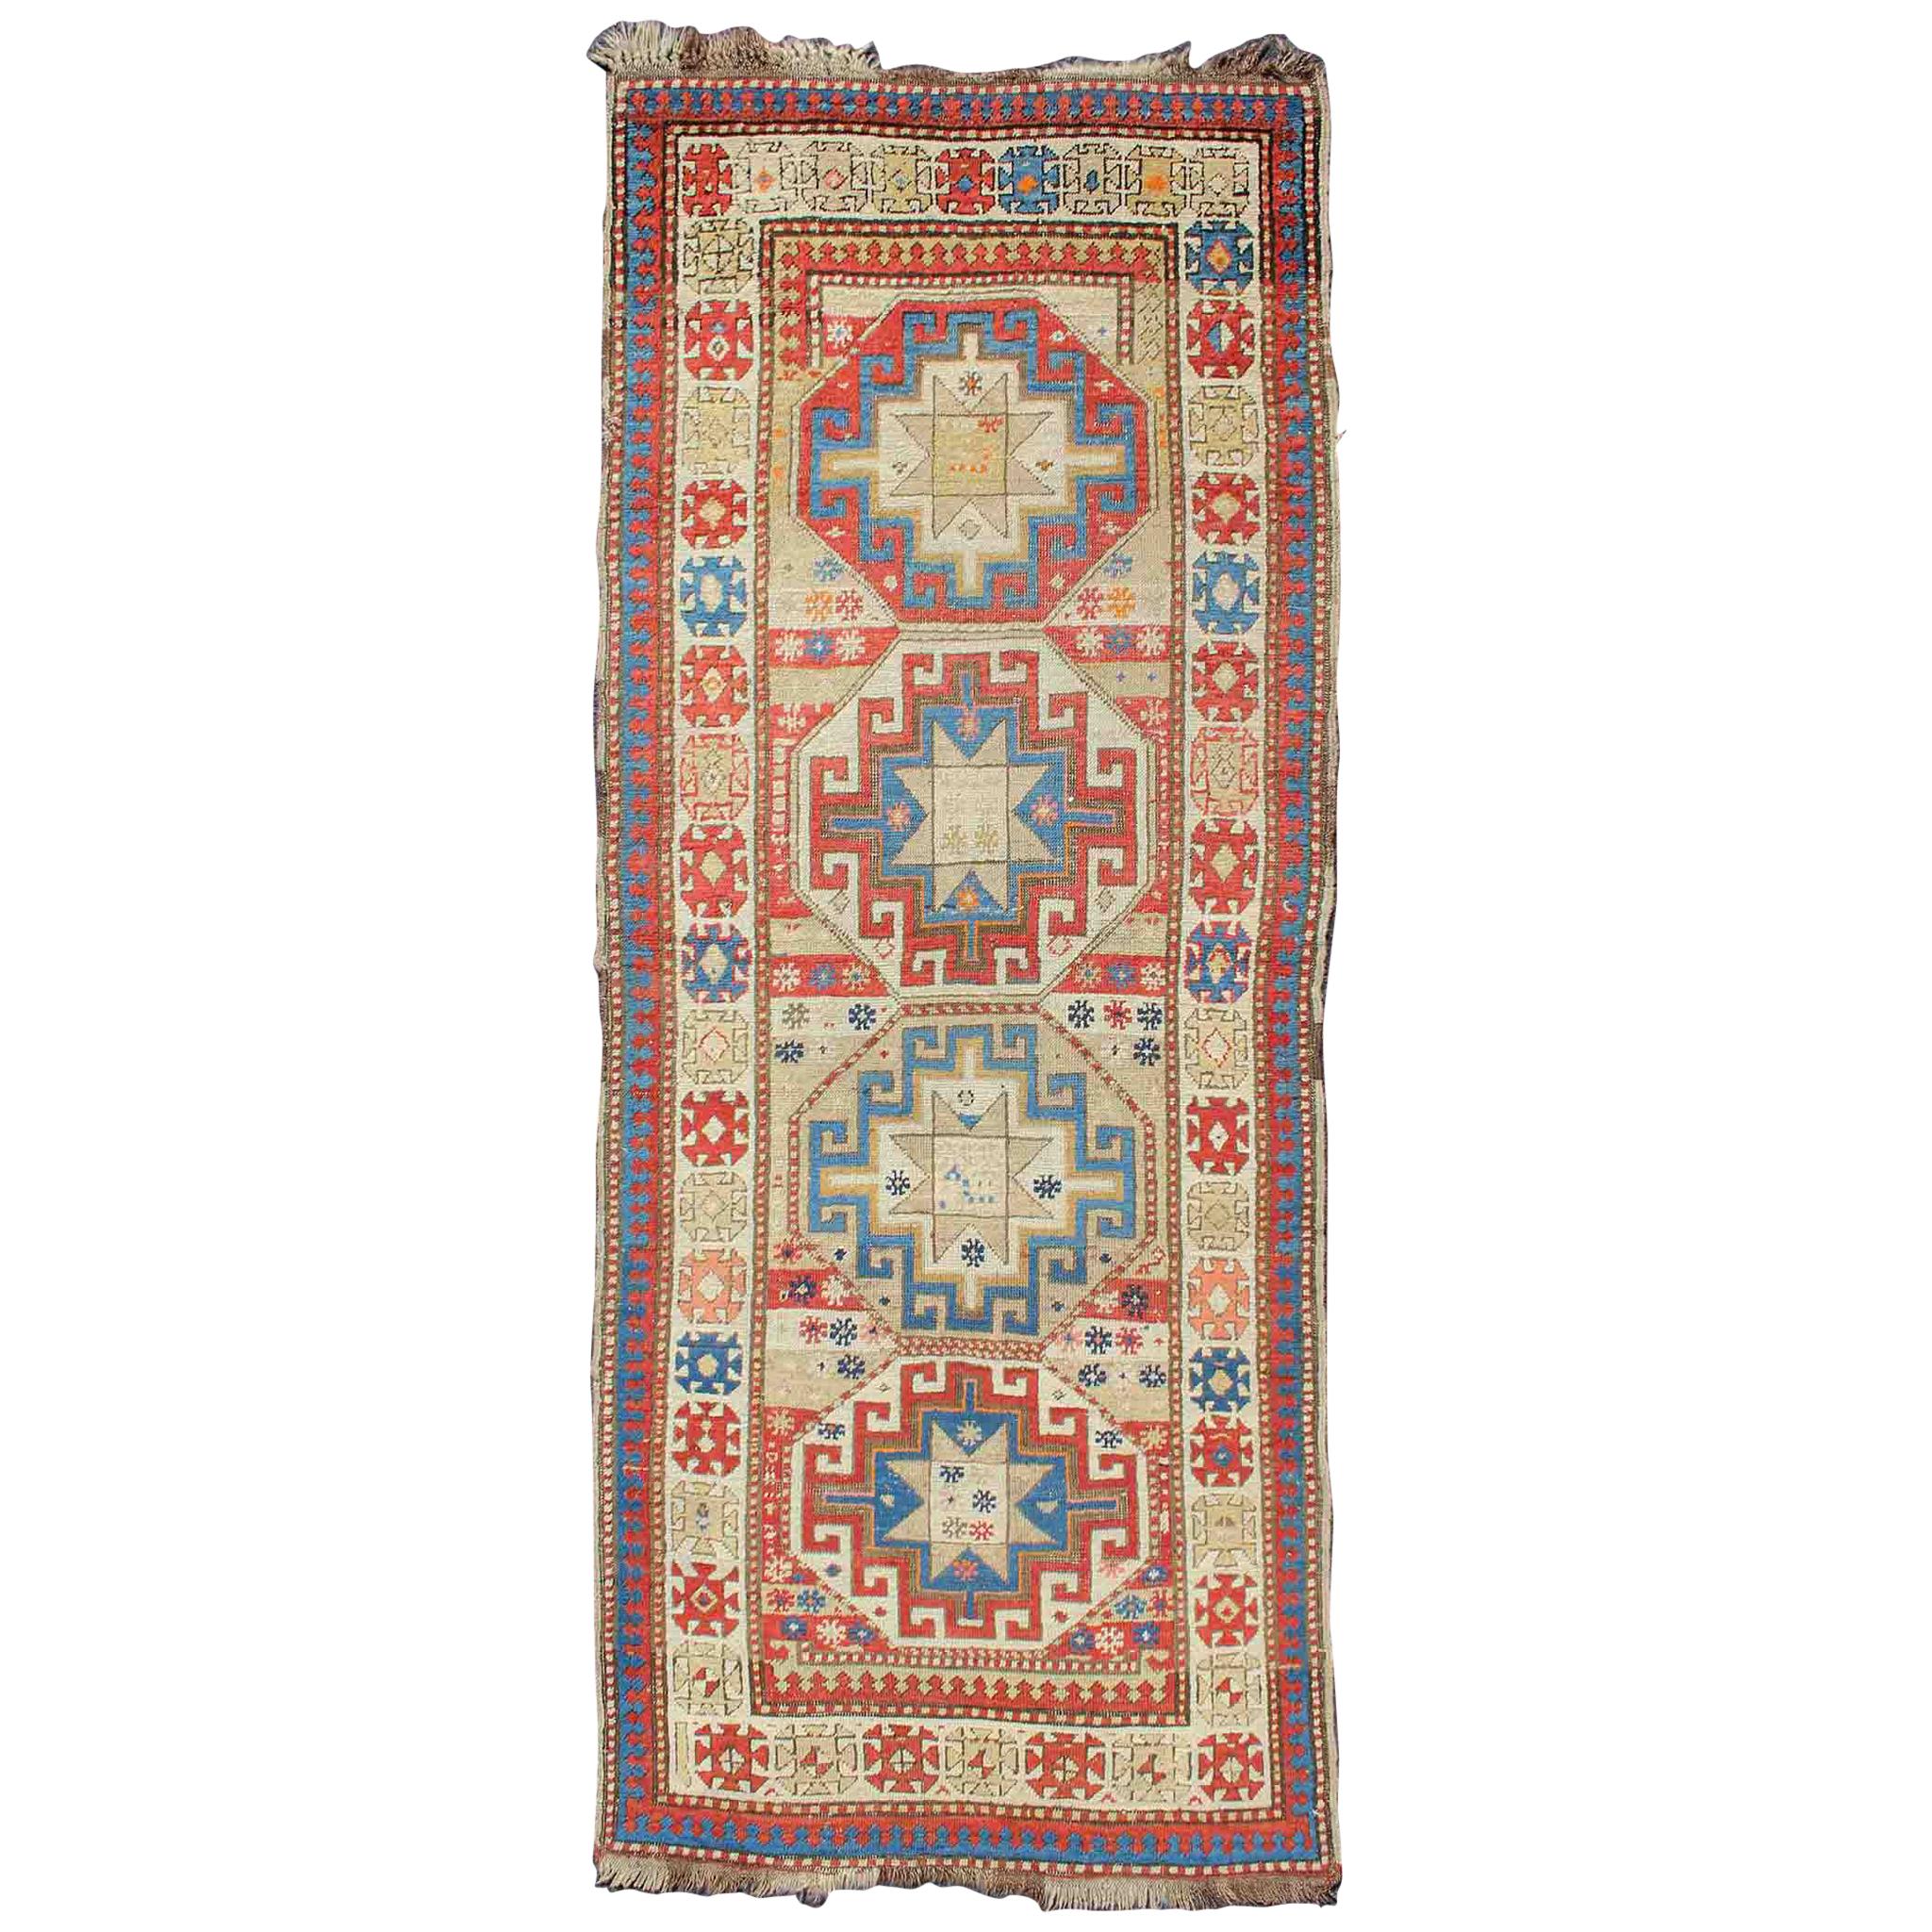 Bunte Medaillons Antiker kaukasischer Kazak Teppich mit geometrischen Medaillons